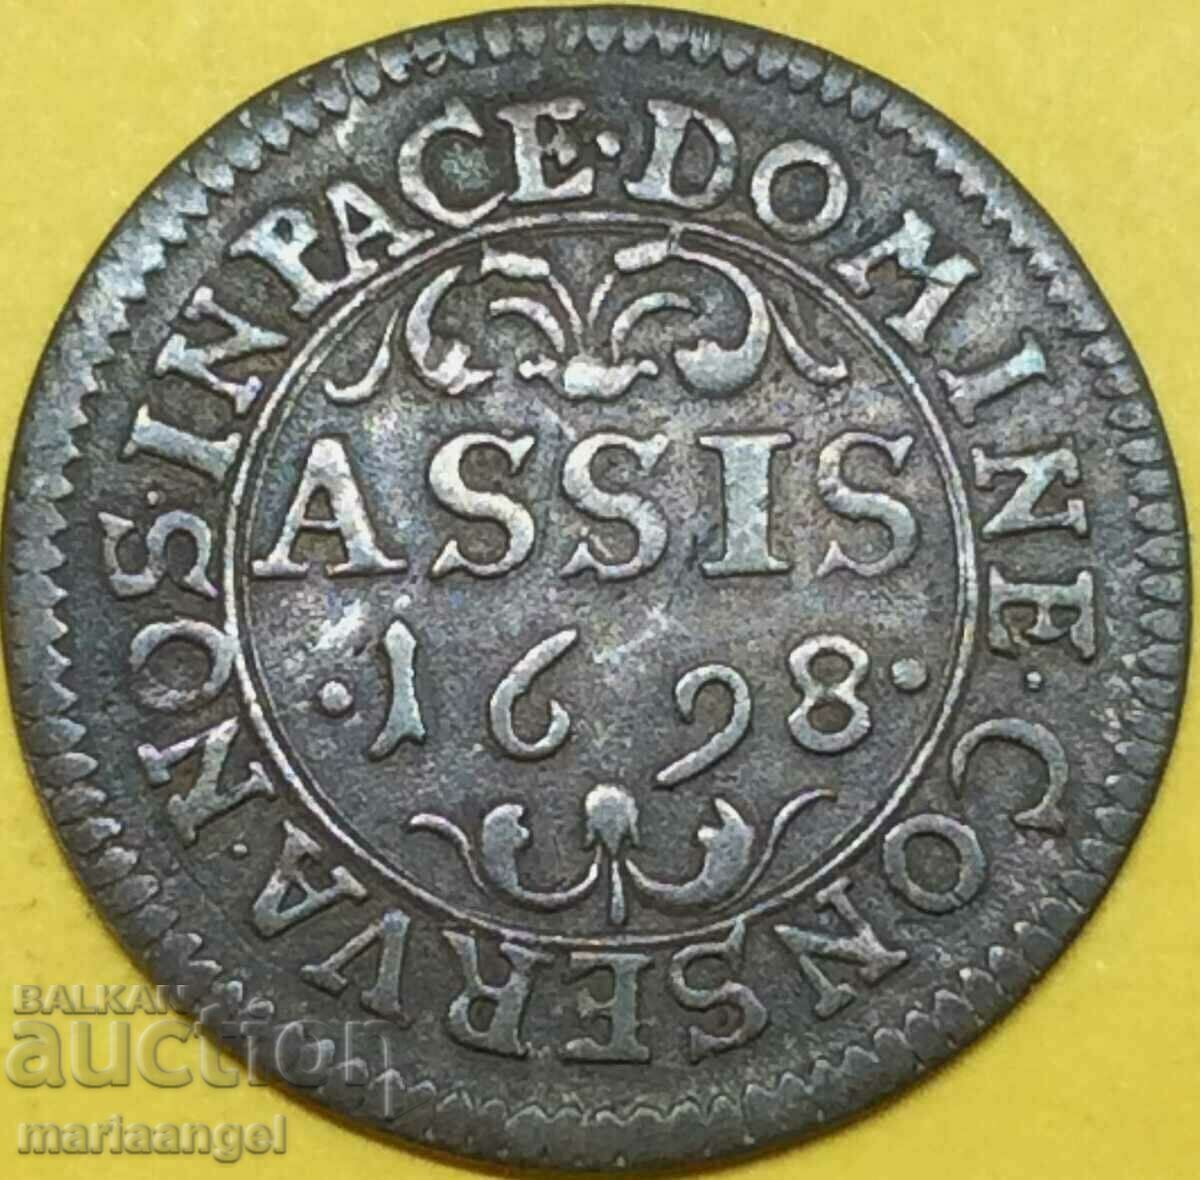 Switzerland 1 Assis 1698 canton Basel silver - rare